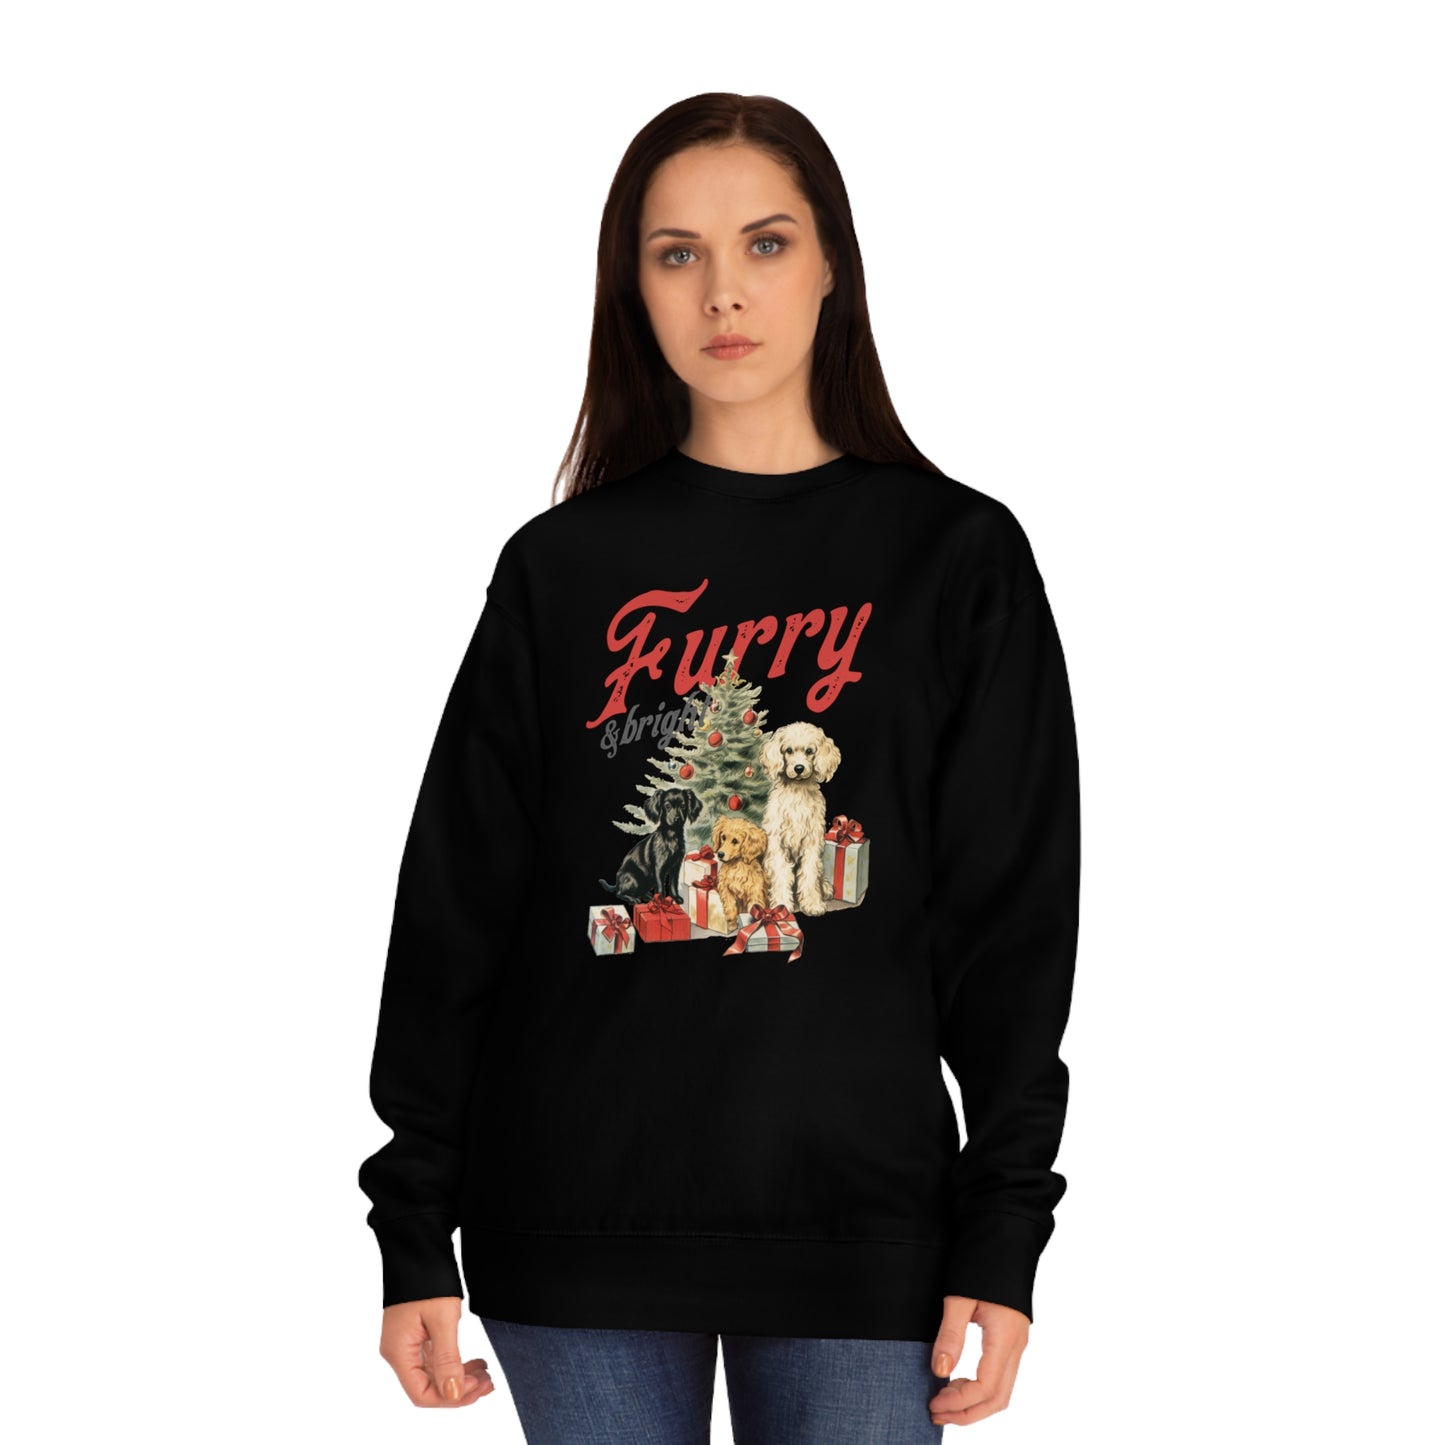 Furry & Bright | Unisex Christmas Crew Sweatshirt